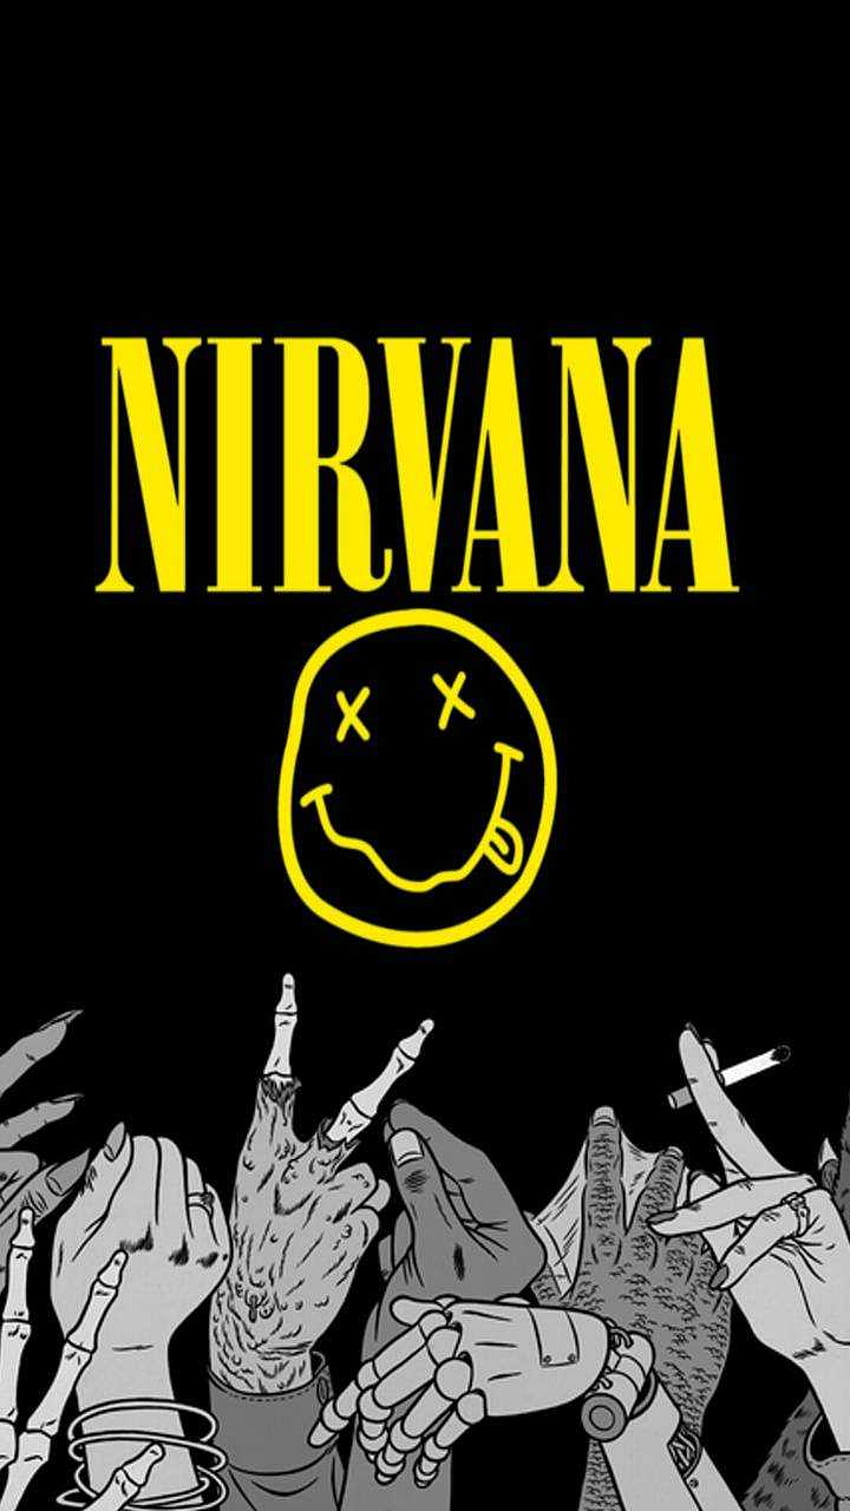 266909 Nirvana Black Monochrome Darkness Vogue Oppo F17 Pro wallpaper  free download 1080x2400  Rare Gallery HD Wallpapers